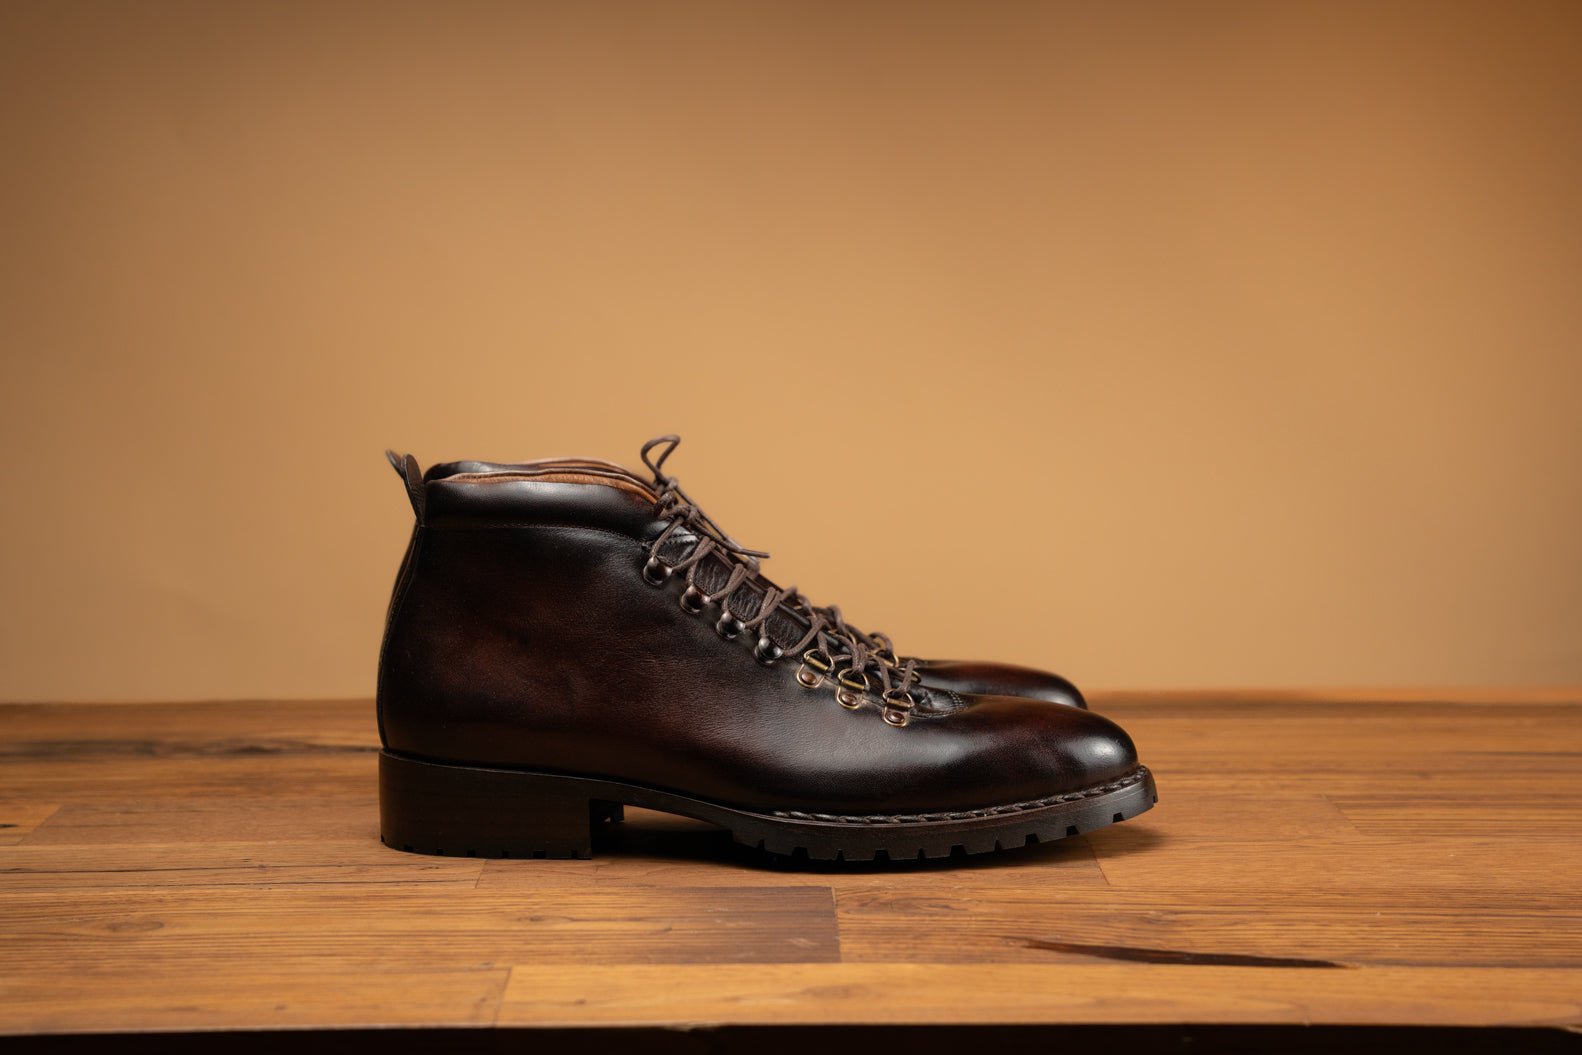 Bosphorus LeatherBosphorus Leather Hiking Boots - Kailash Dark Brown